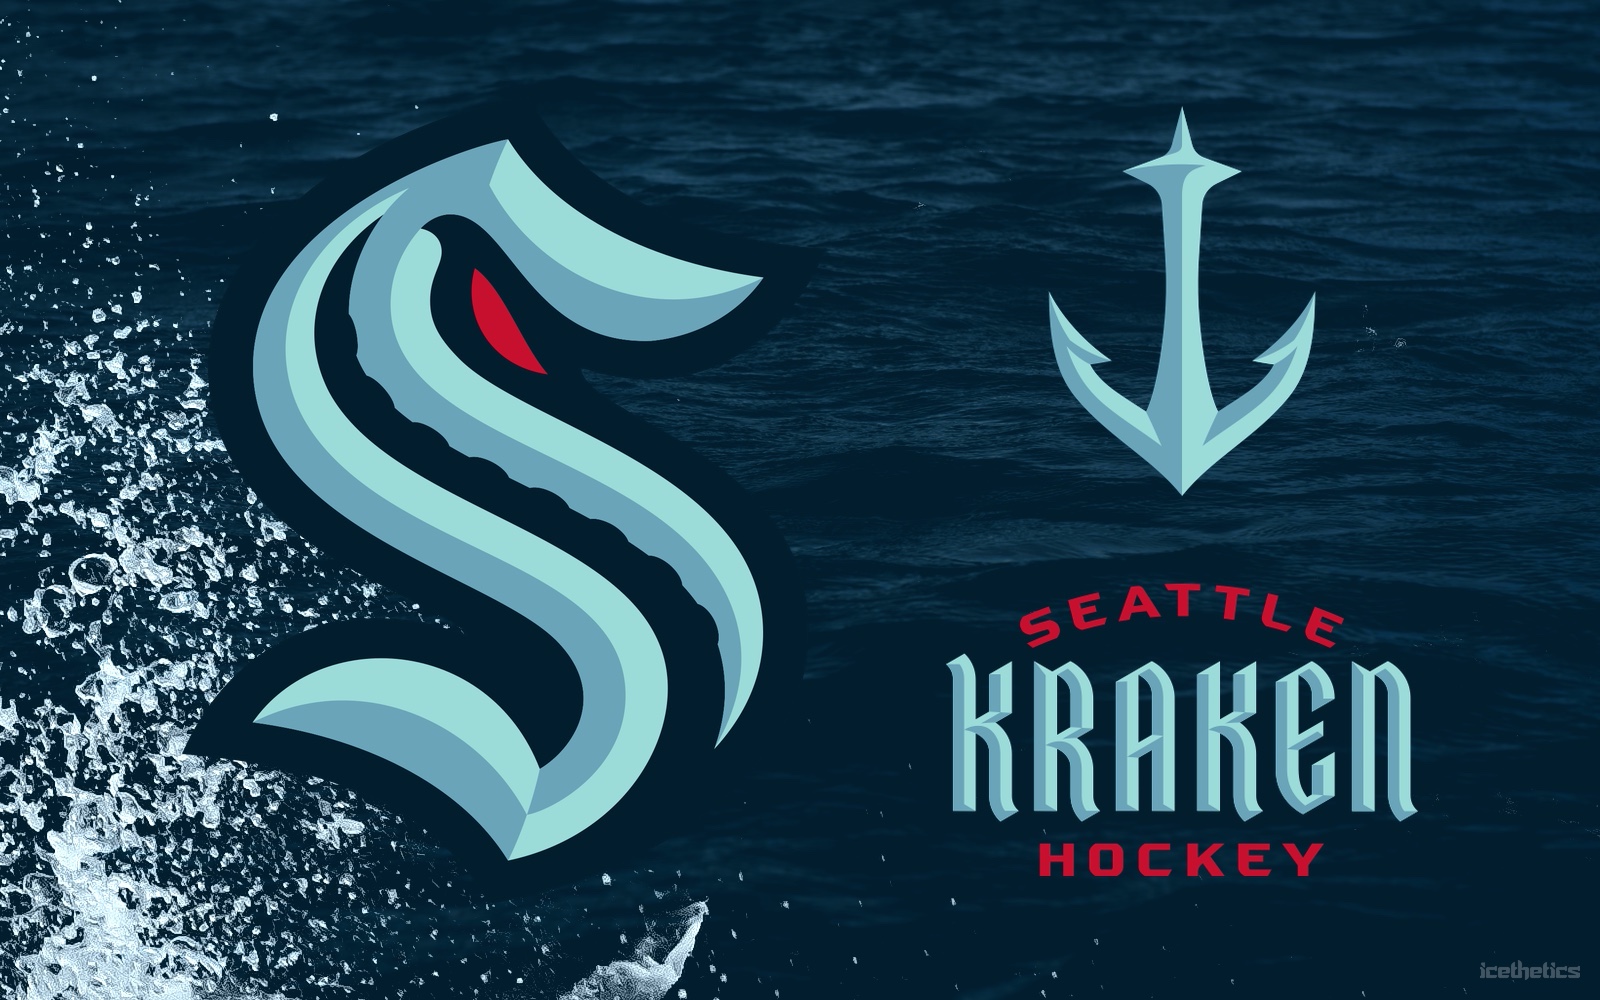 expansion team unveils Kraken nickname 